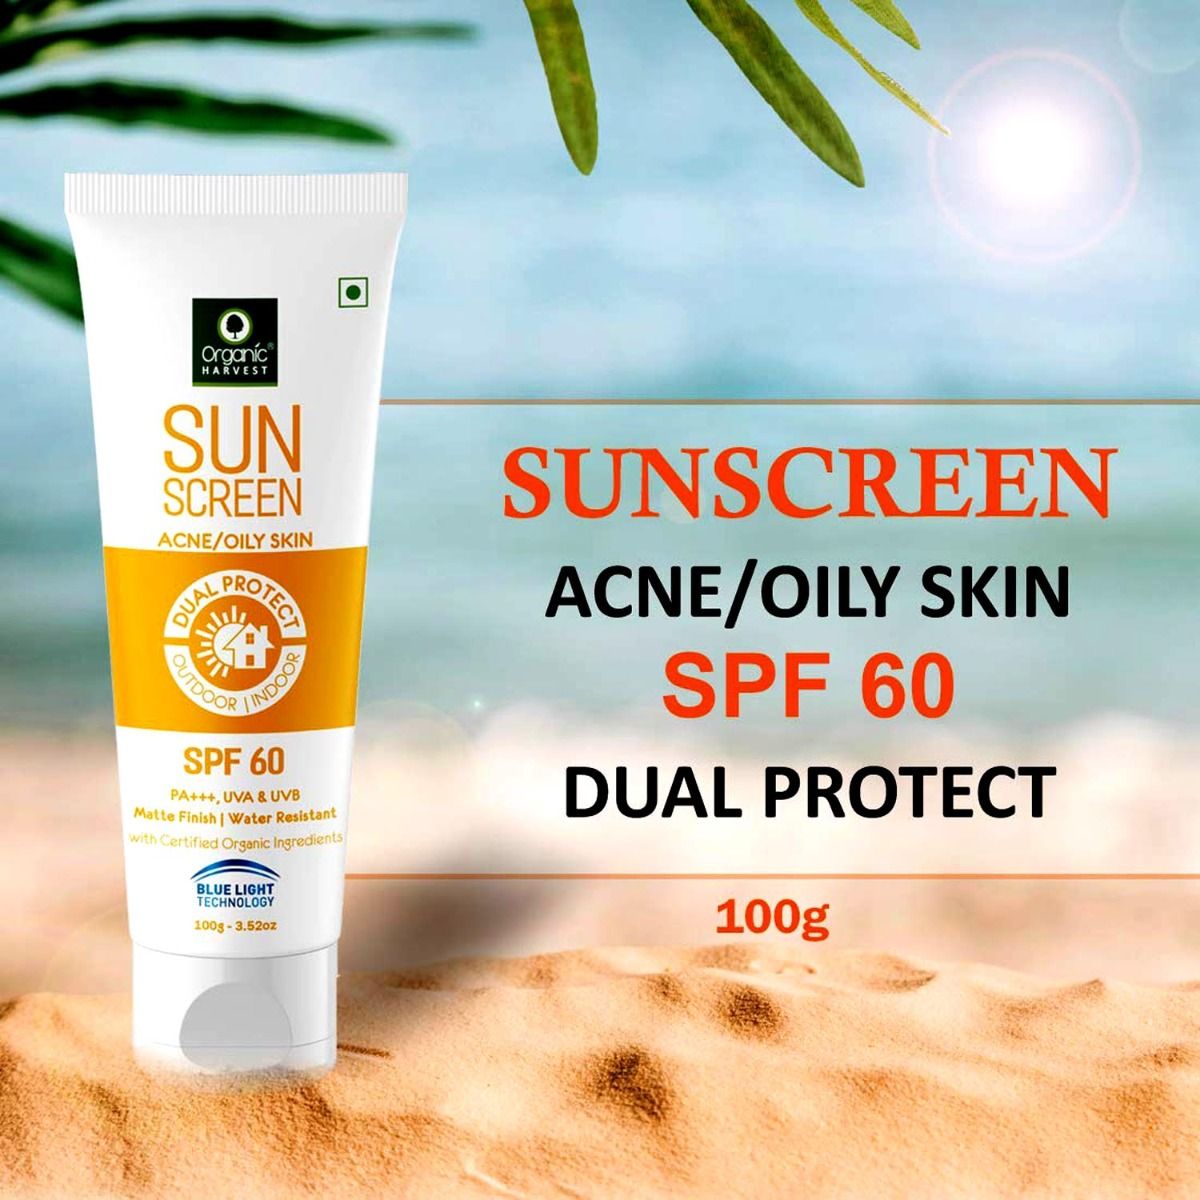 Organic Harvest Sunscreen SPF 60 PA+++ UVA & UVB For Acne/Oily Skin, 100 gm, Pack of 1 